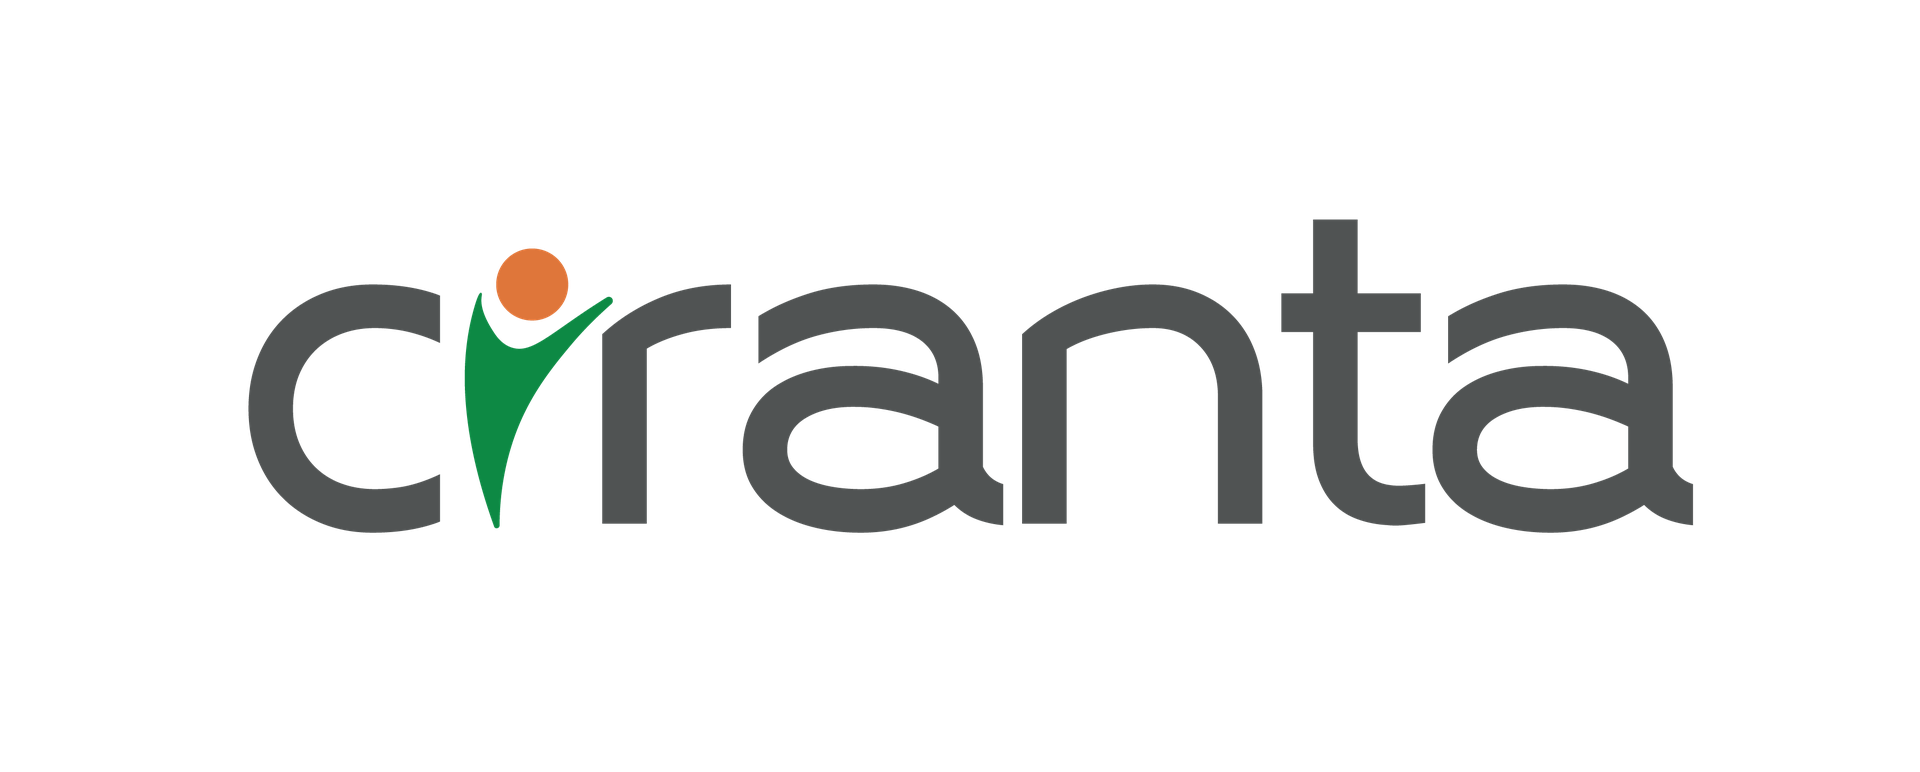 Ciranta IT Services Inc